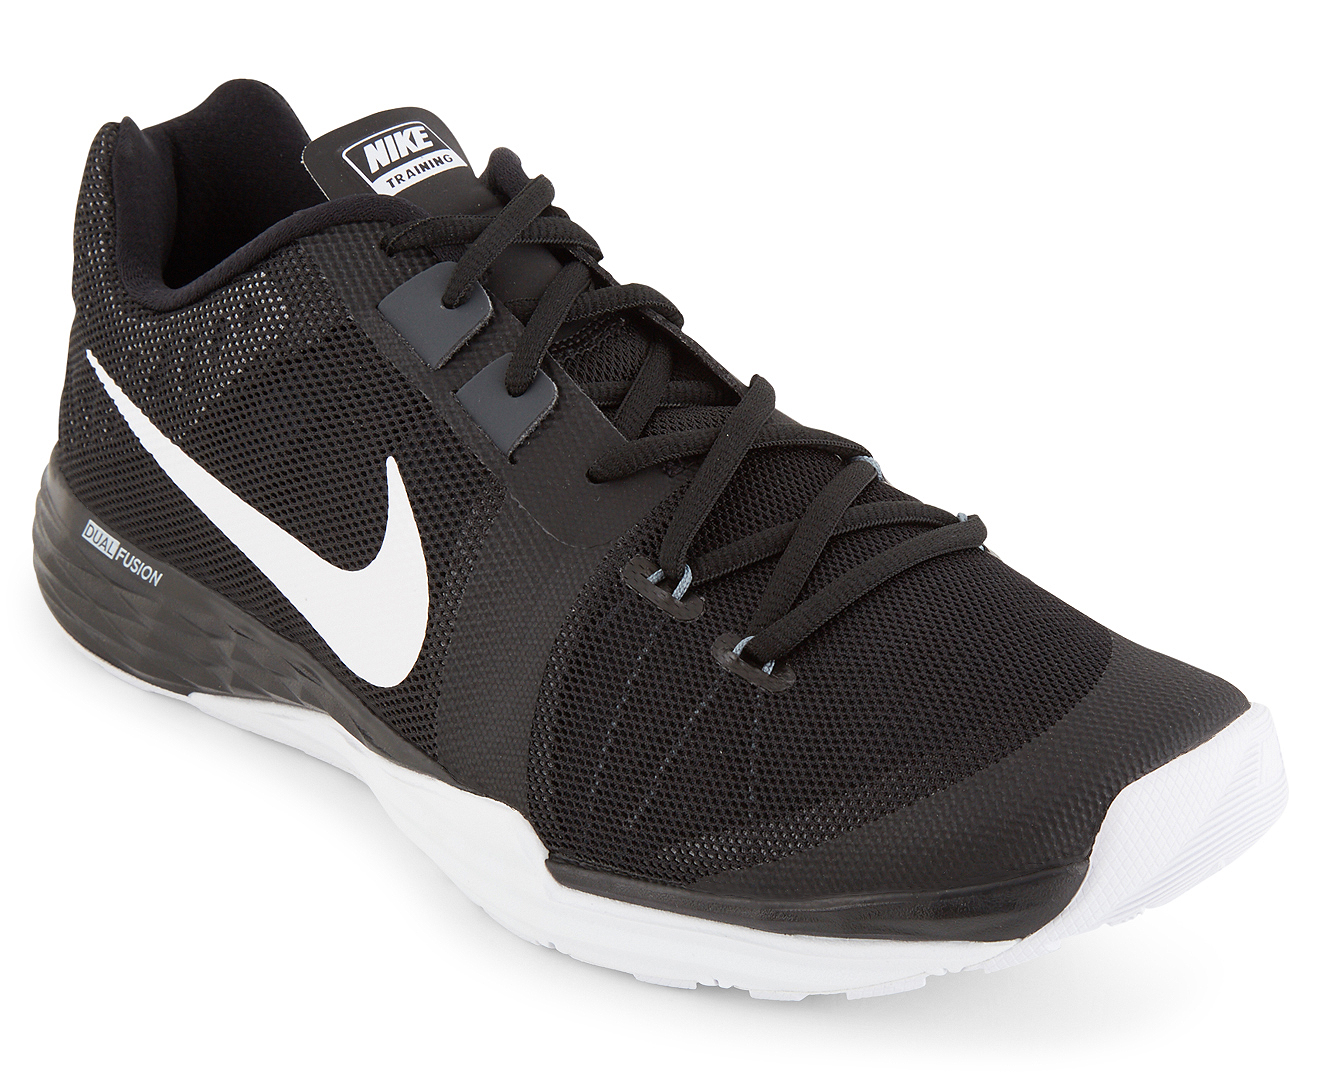 Nike Men's Train Prime Iron DF Shoe - Black/White | Catch.co.nz